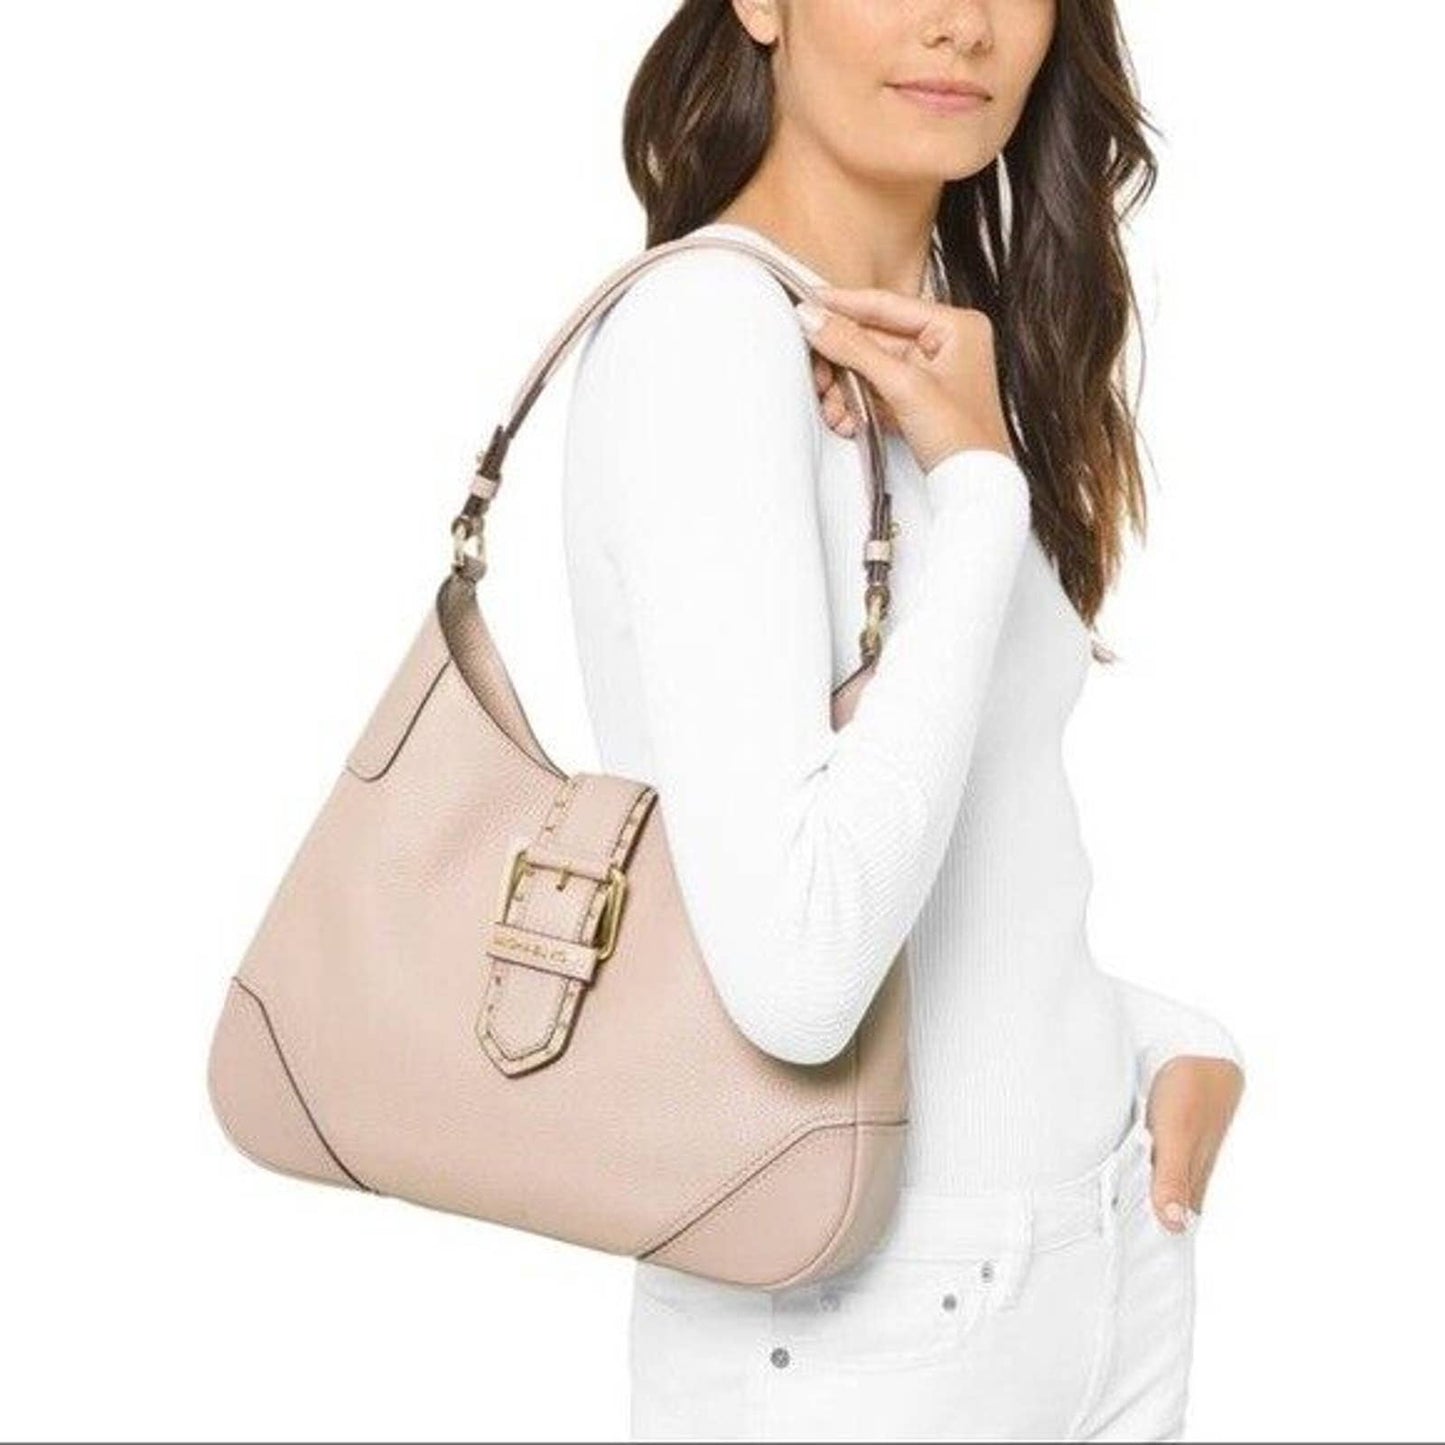 MICHAEL Michael Kors Lillian Shoulder Bag, Soft Pink Leather